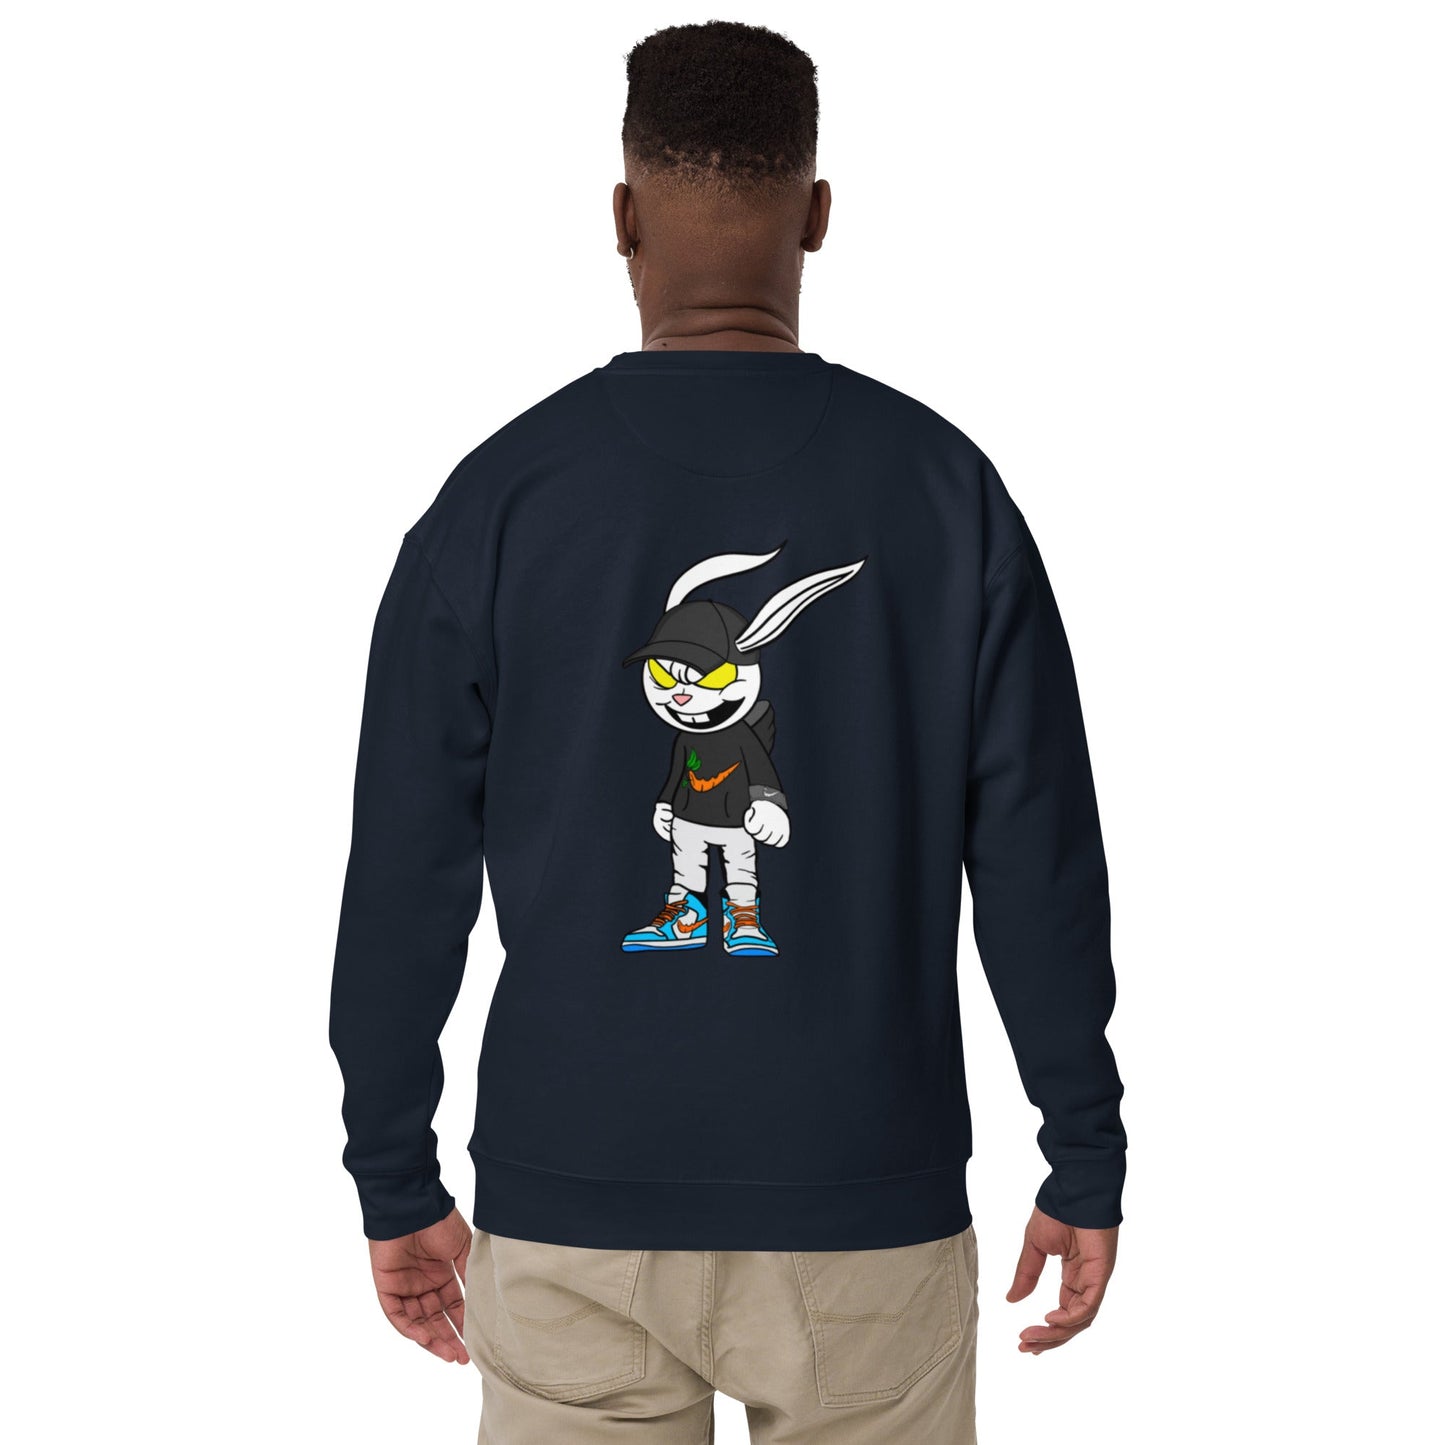 SNOW Style 3 Sweatshirt